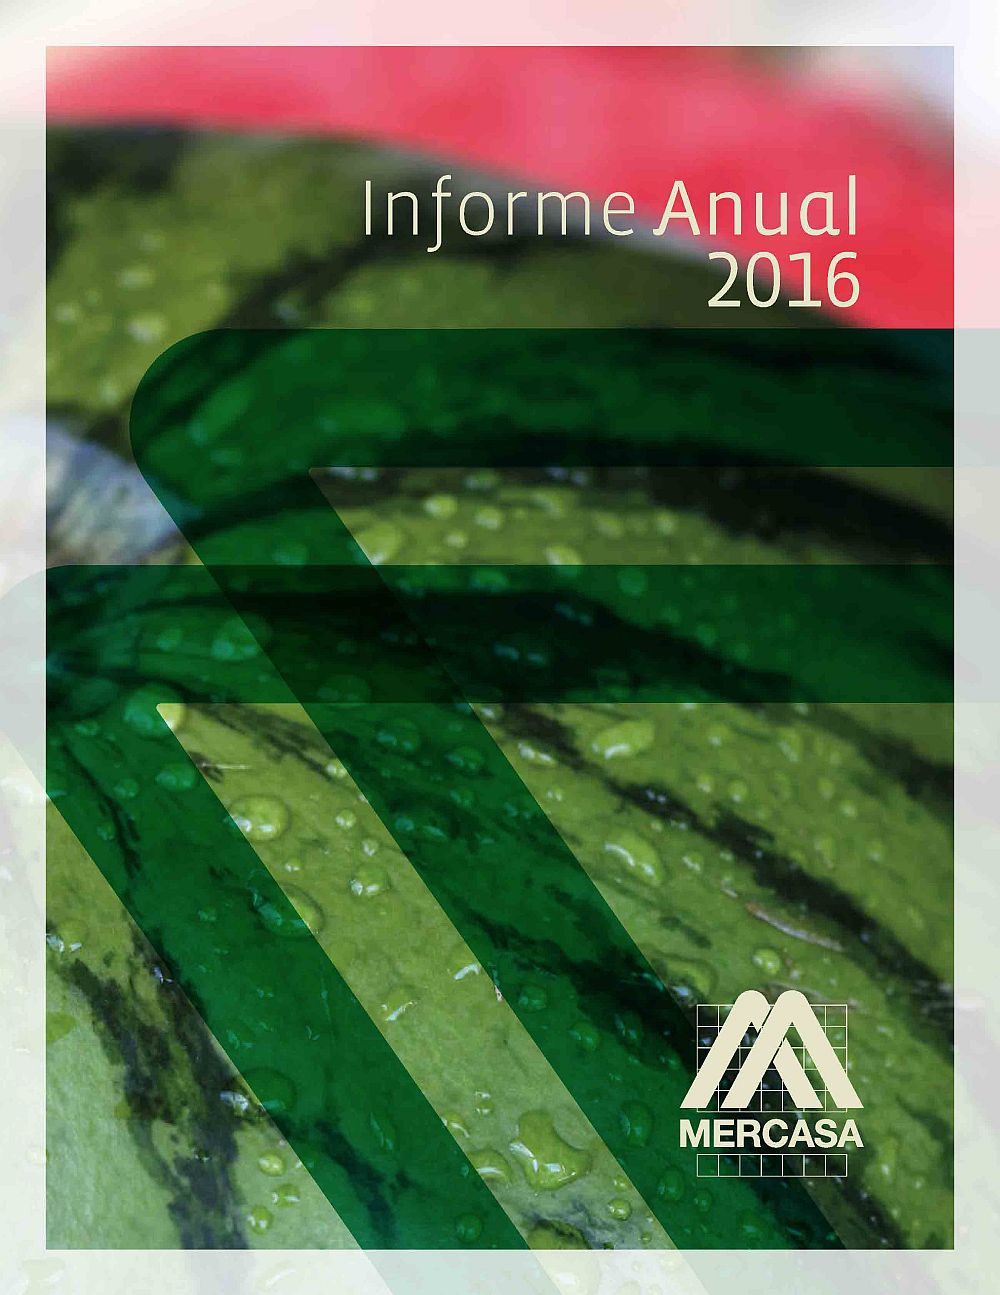 Informe anual Mercasa 2016